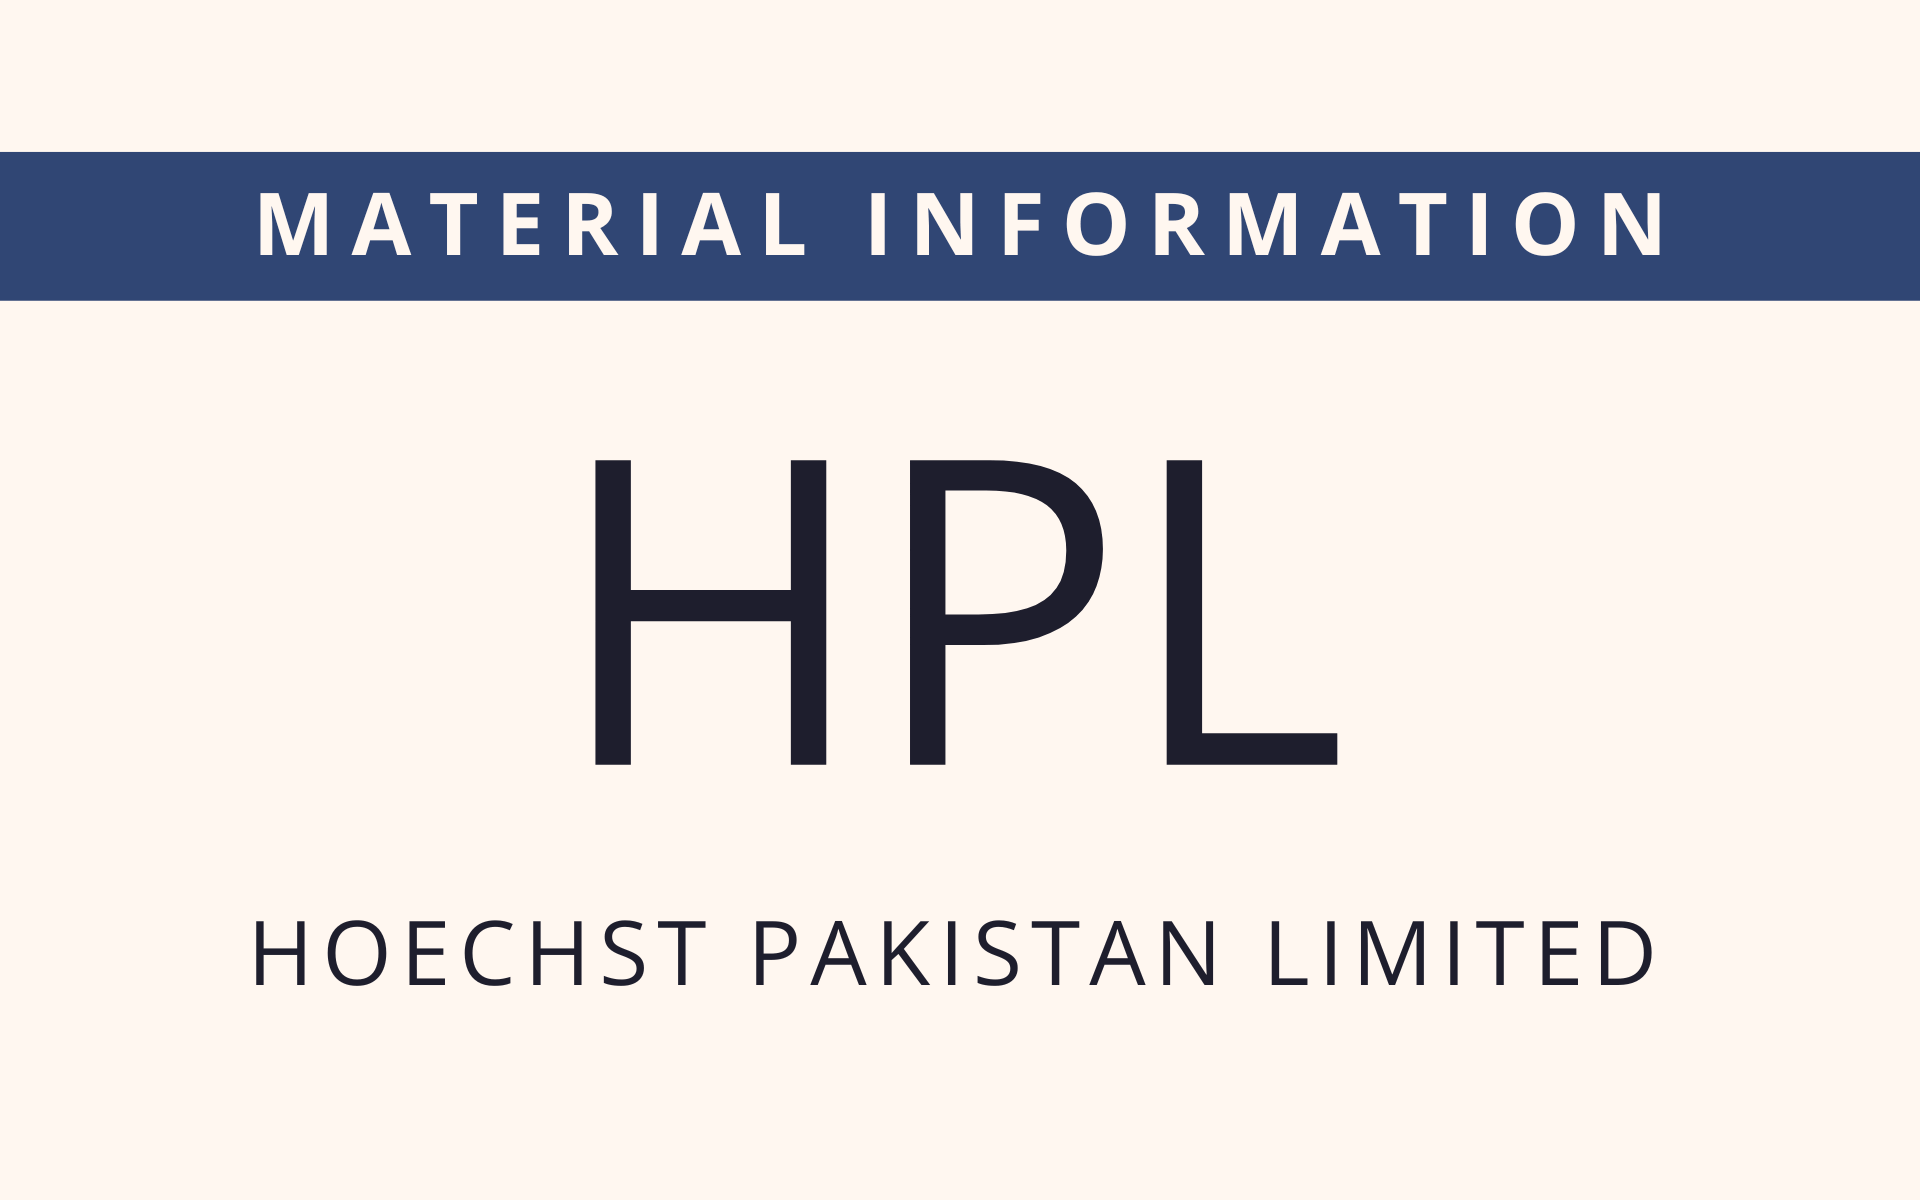 HPL - Material Information